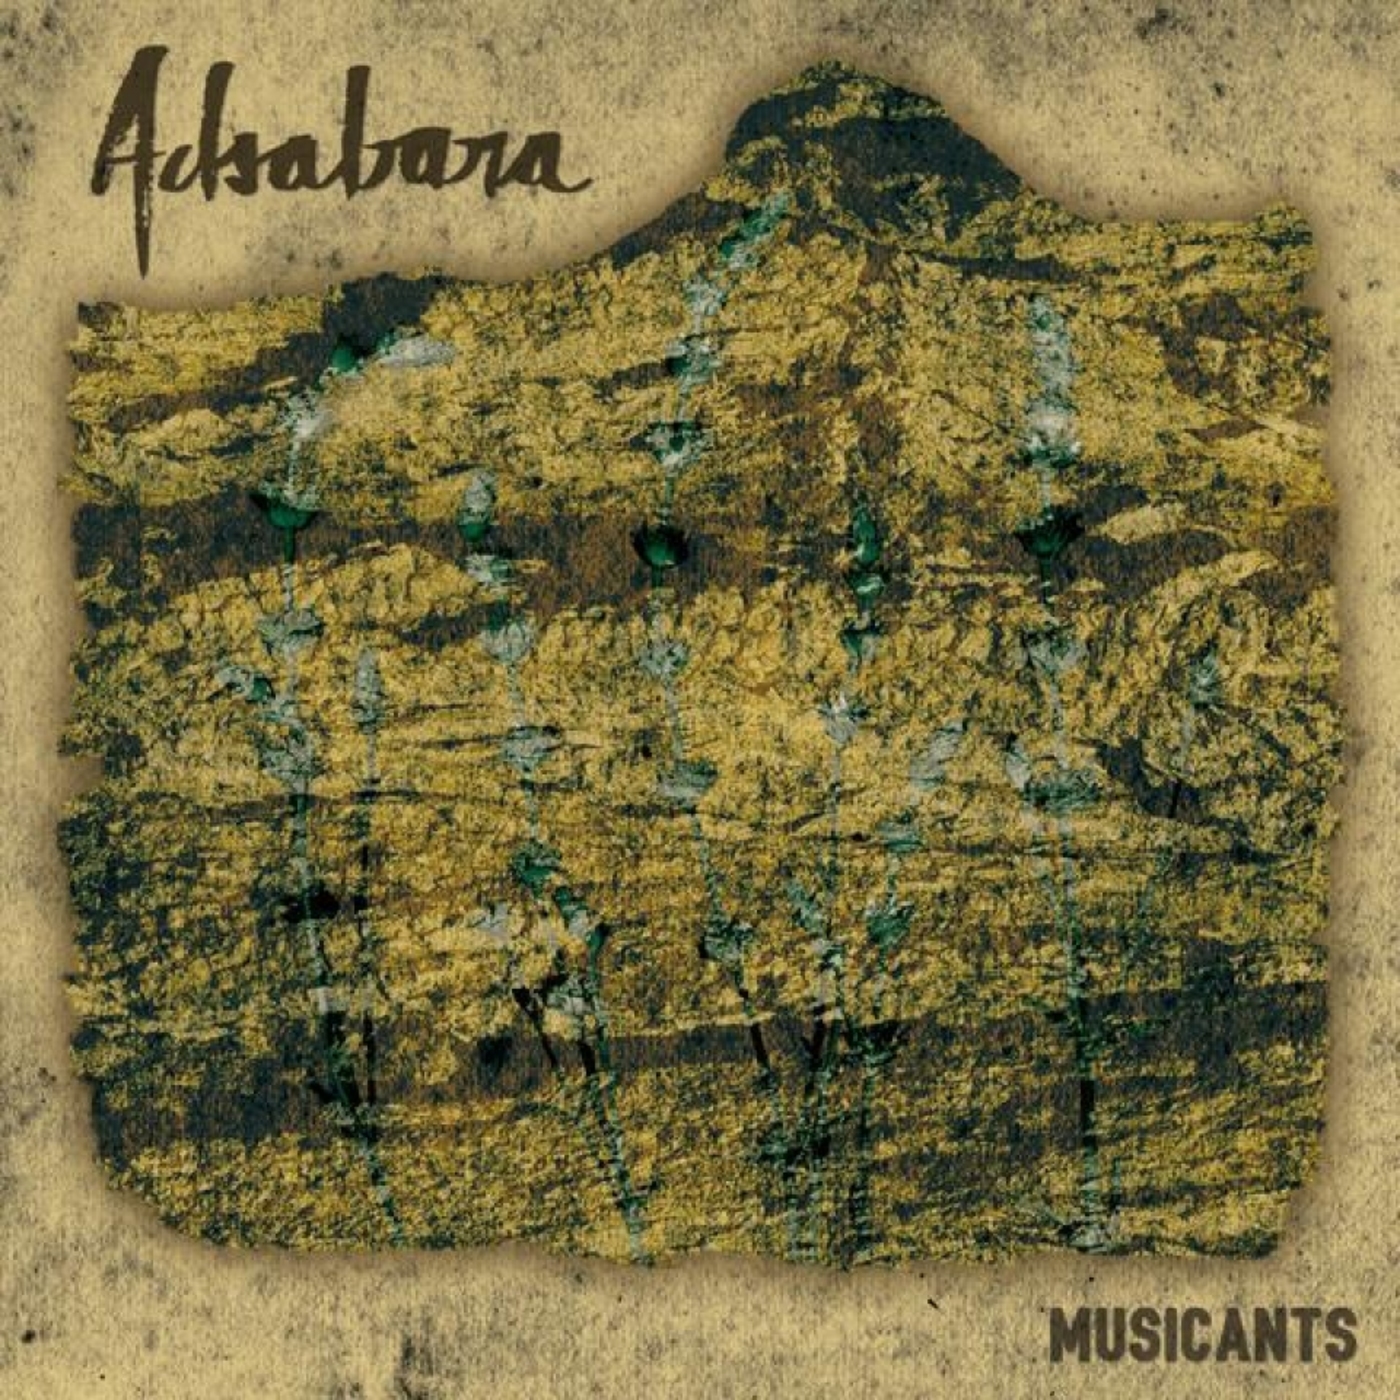 Musicants - Adsabara | musica en valencià